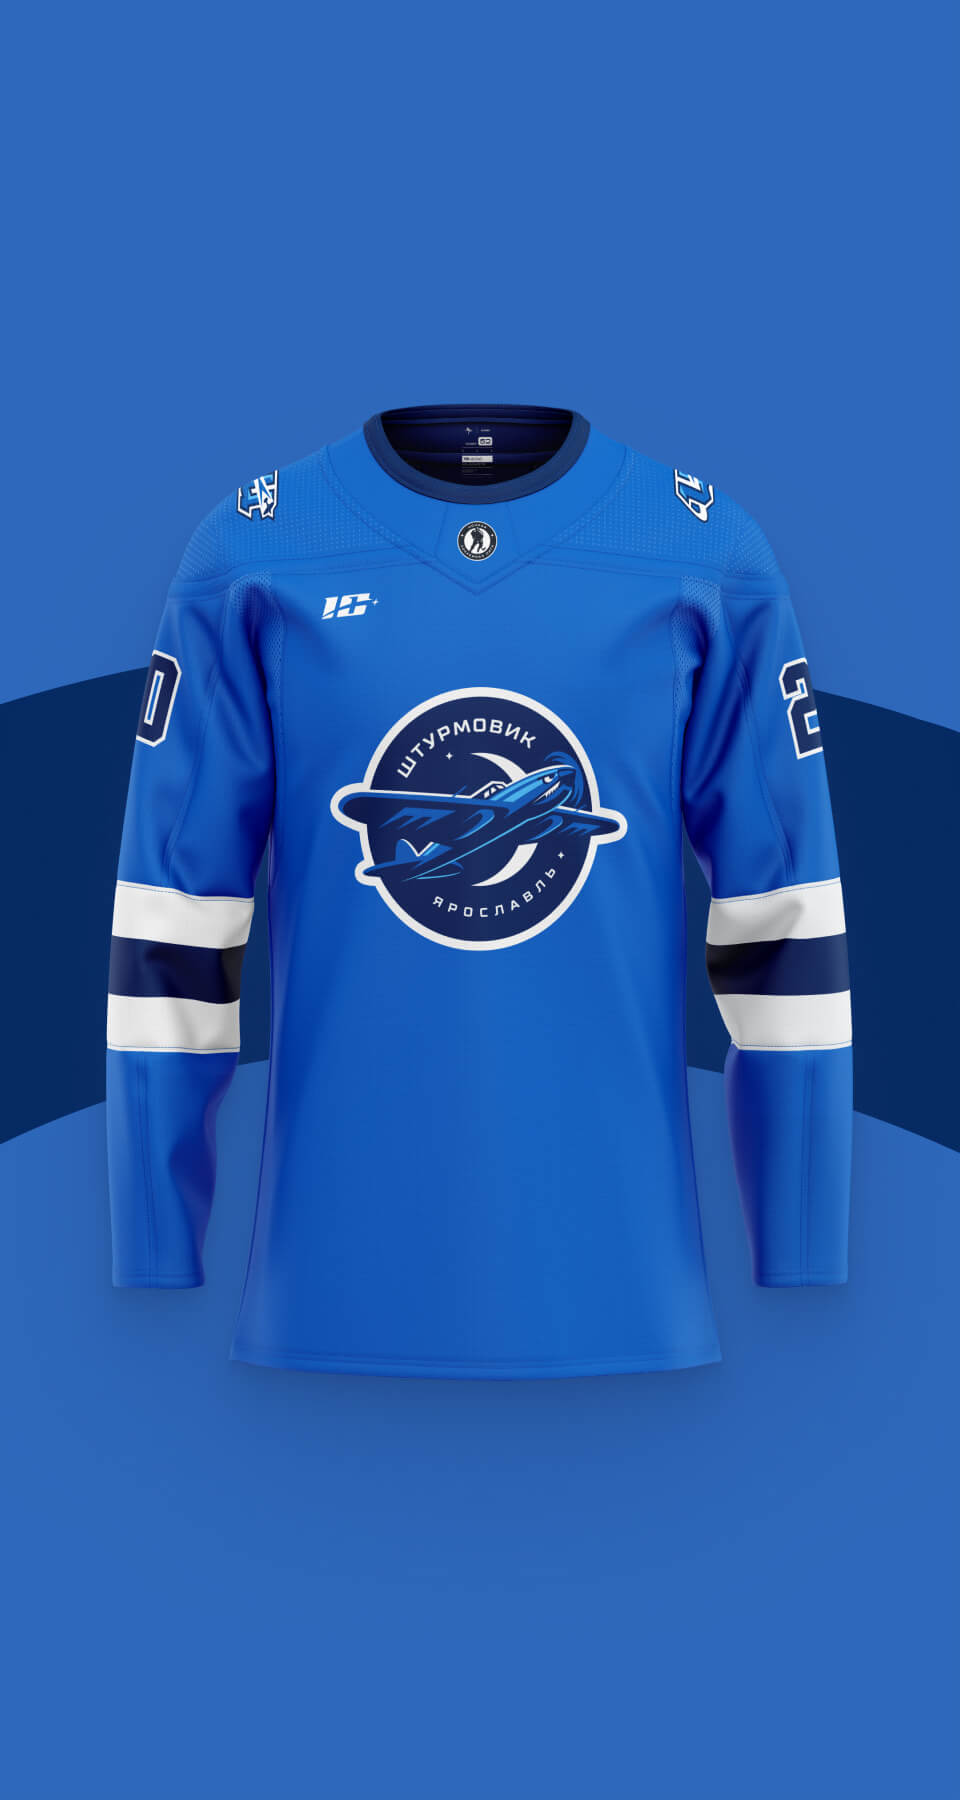 Hockey Jersey design concept